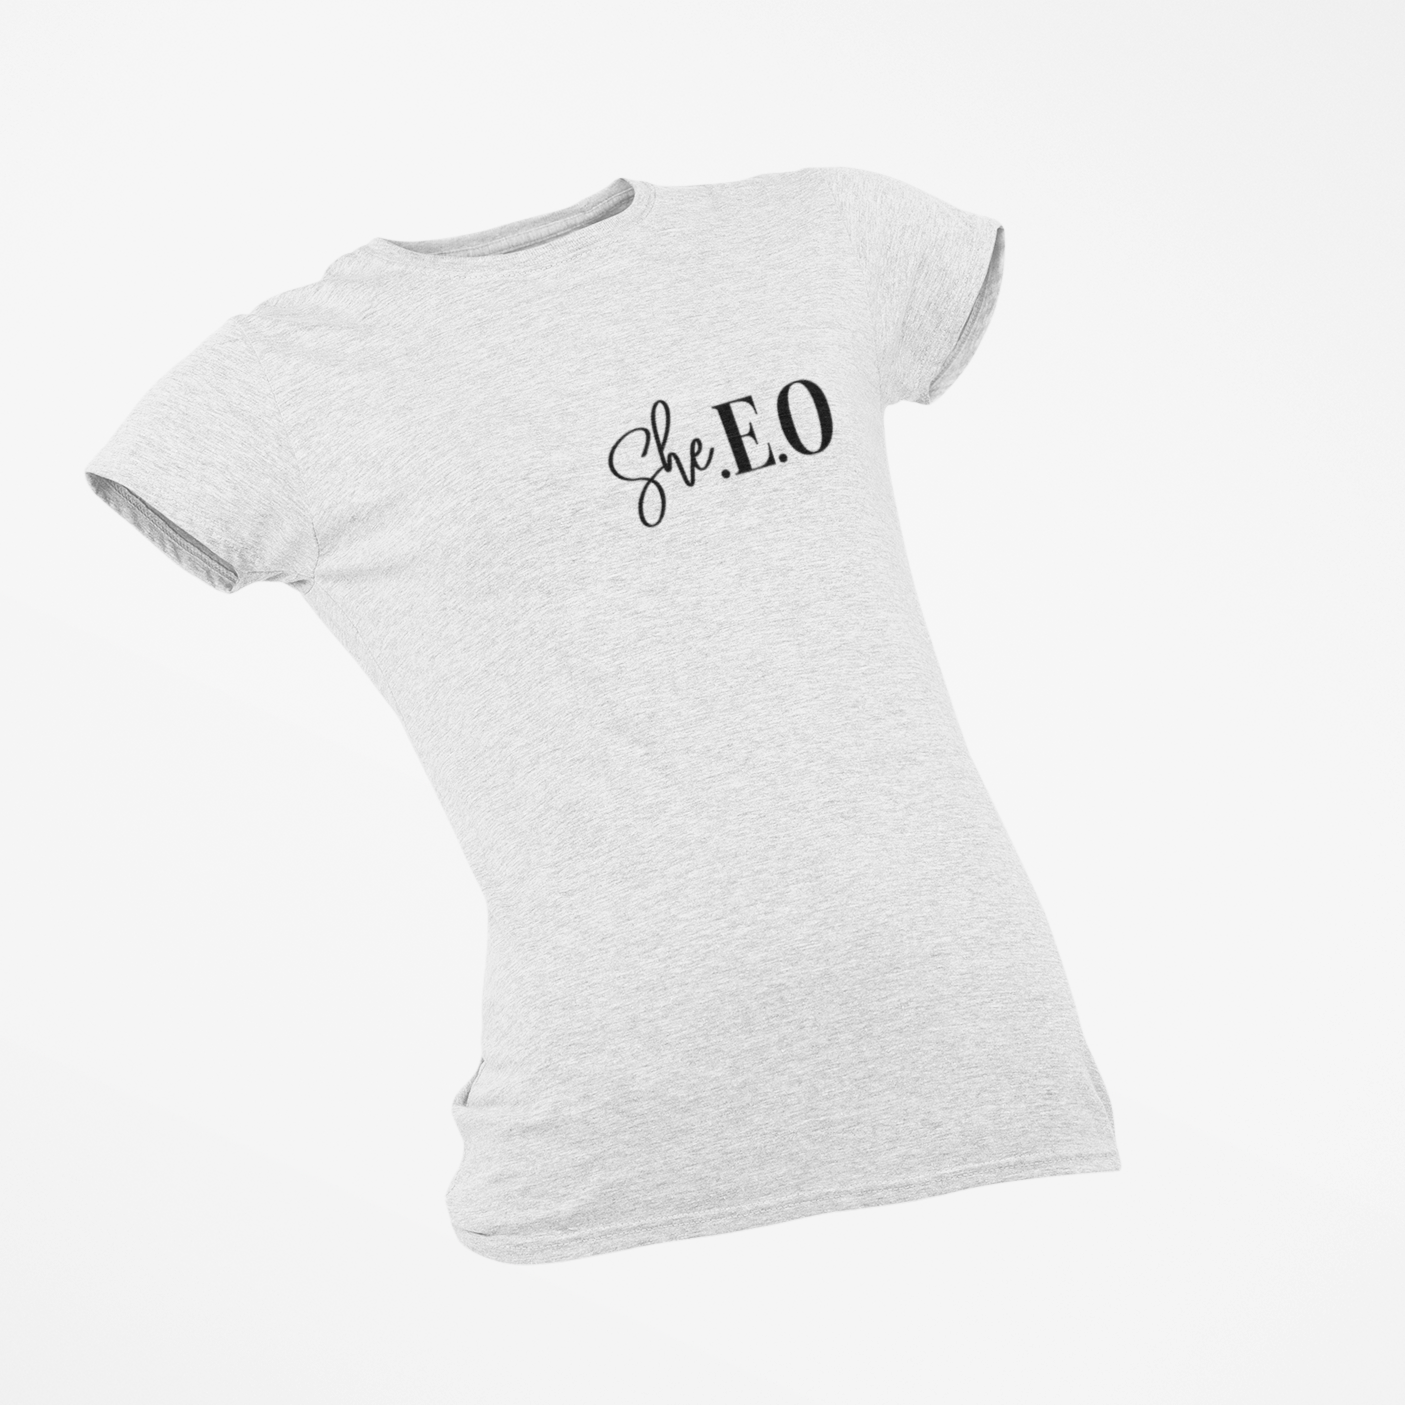 She.E.O T-Shirt - PR Designs, LLC